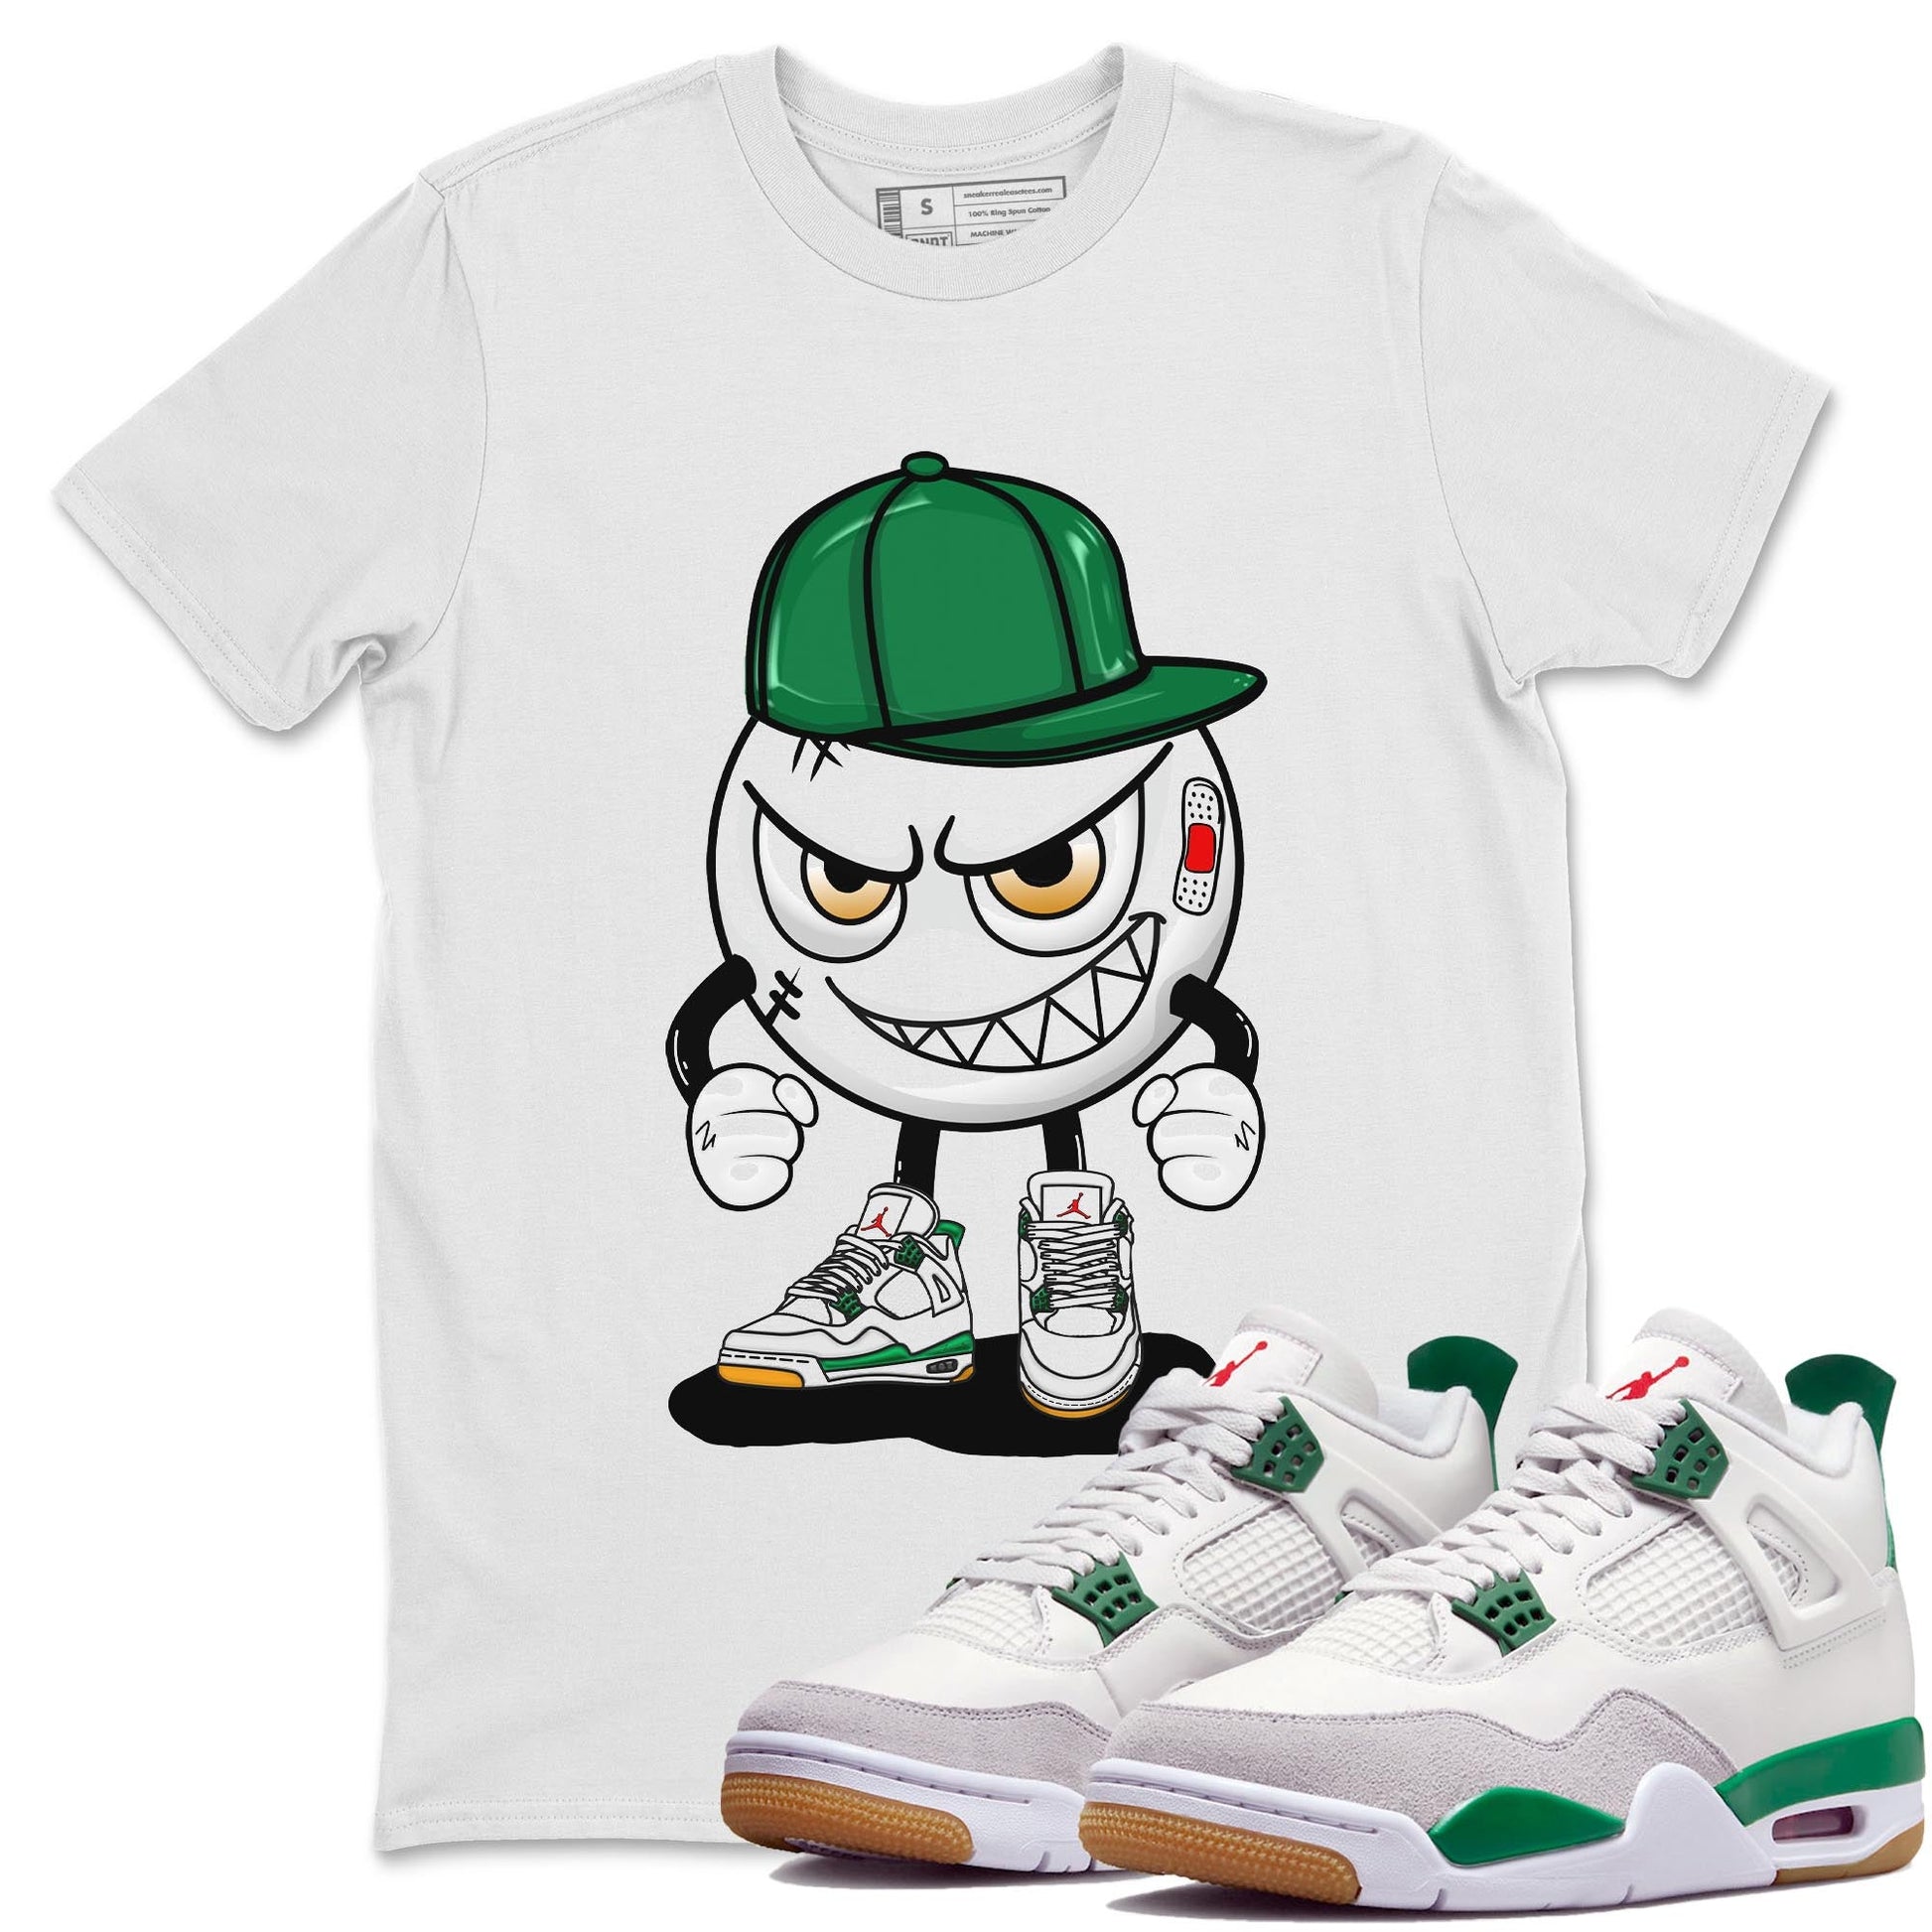 Jordan 4 Pine Green SB Sneaker Match Tees Mischief Emoji Sneaker Tees 4s Pine Green Nike SB Sneaker Tees Sneaker Release Shirts Unisex Shirts White 1